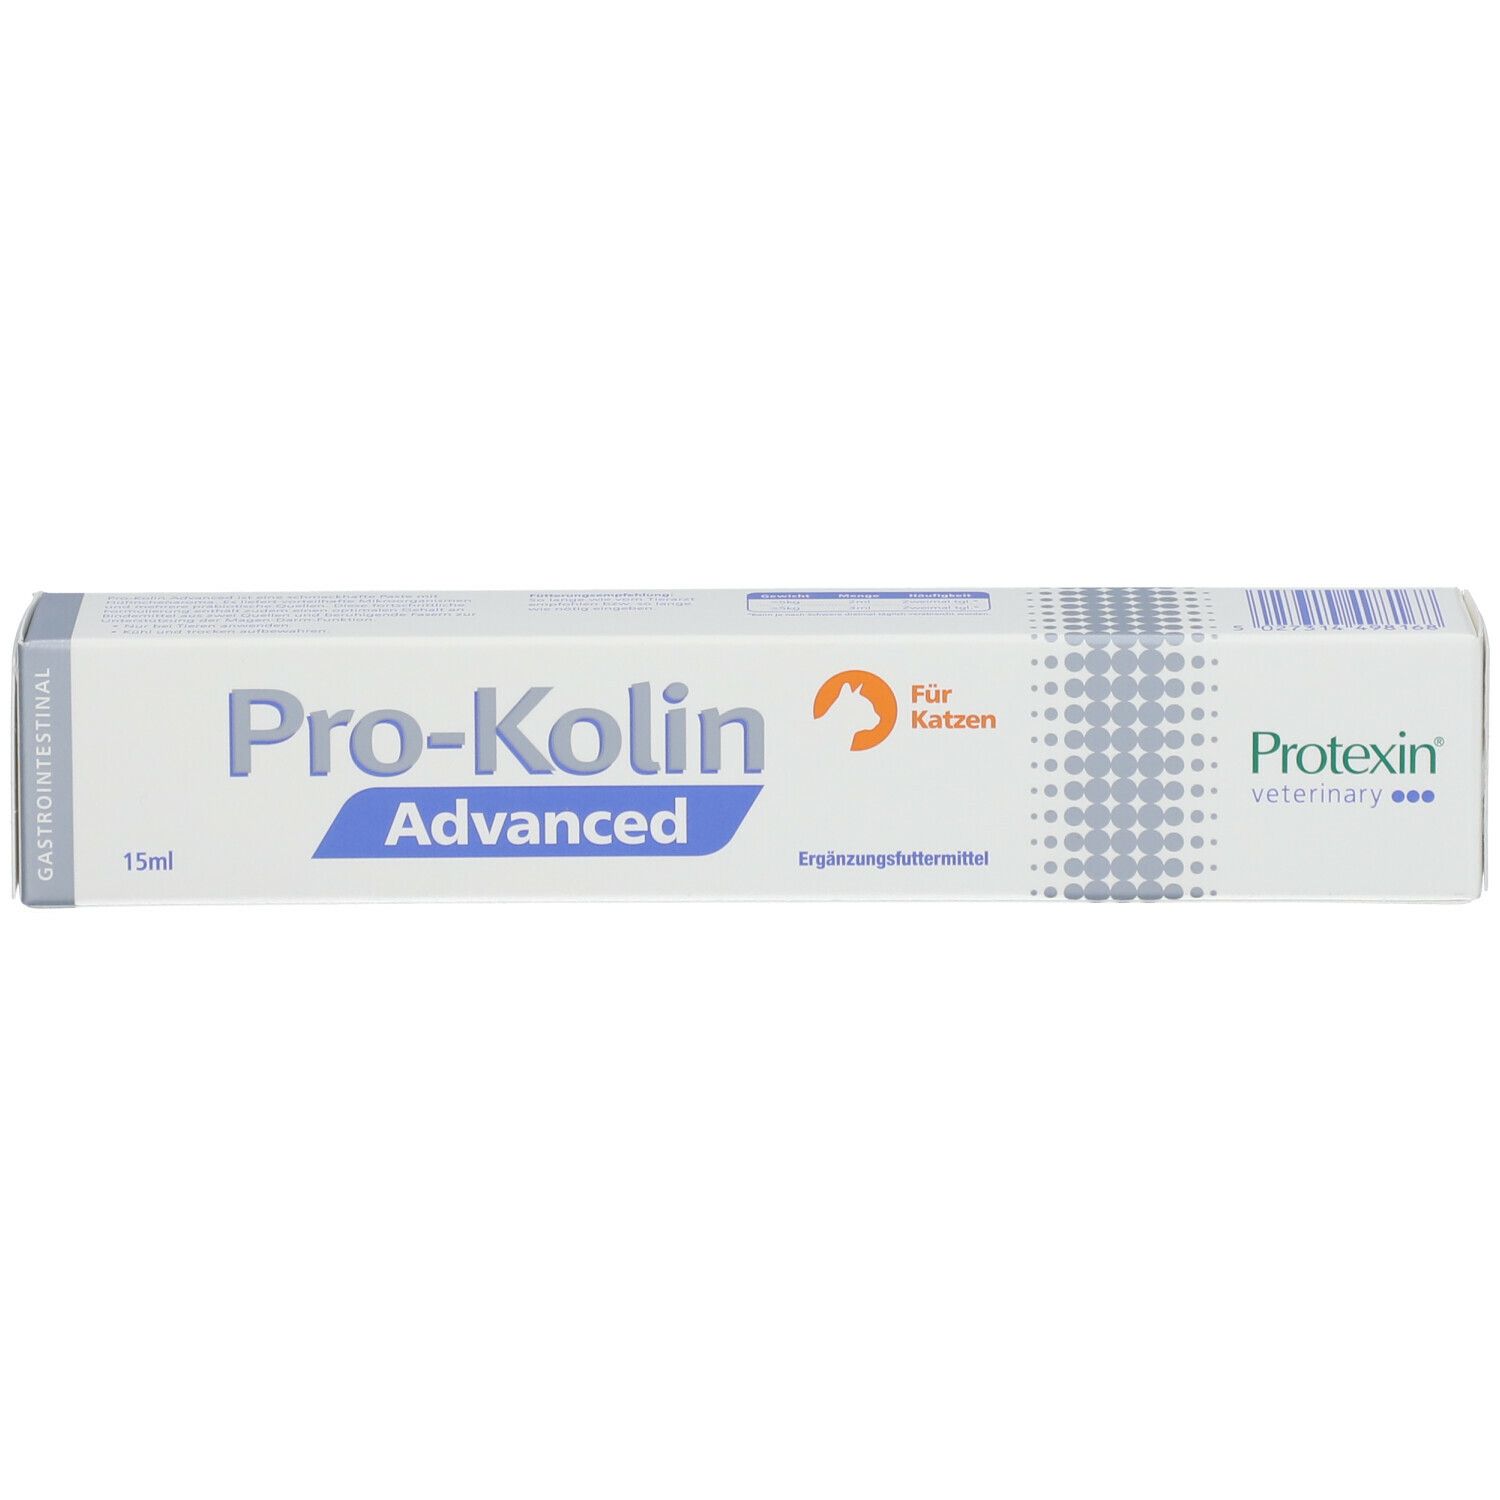  Pro-Kolin Advanced